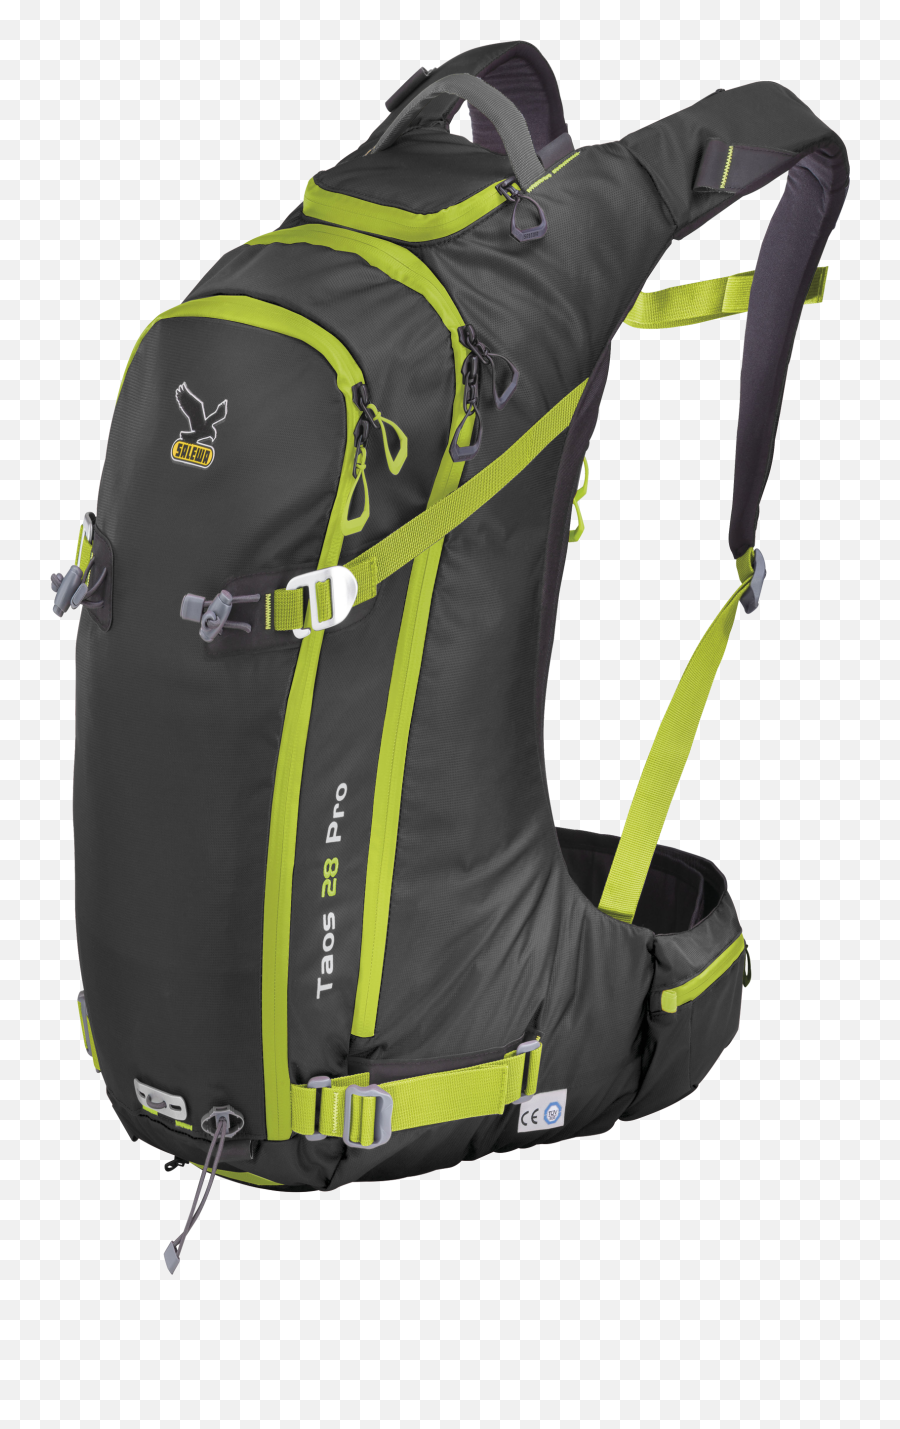 Salewa Taos 28 Pro Backpack Png Image Backpacks Golf Bags Bookbag